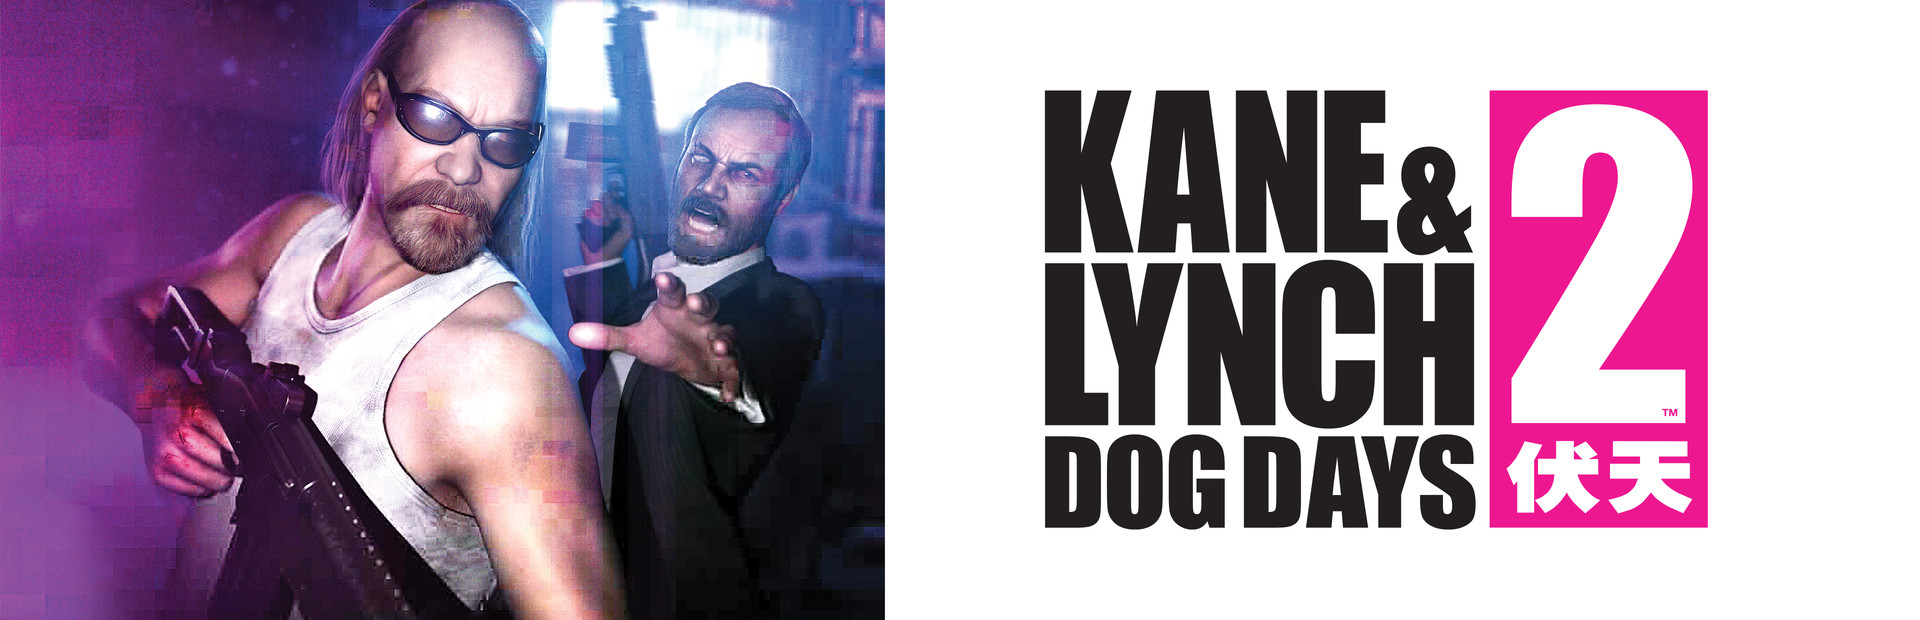 Kane & Lynch 2: Dog Days cover image